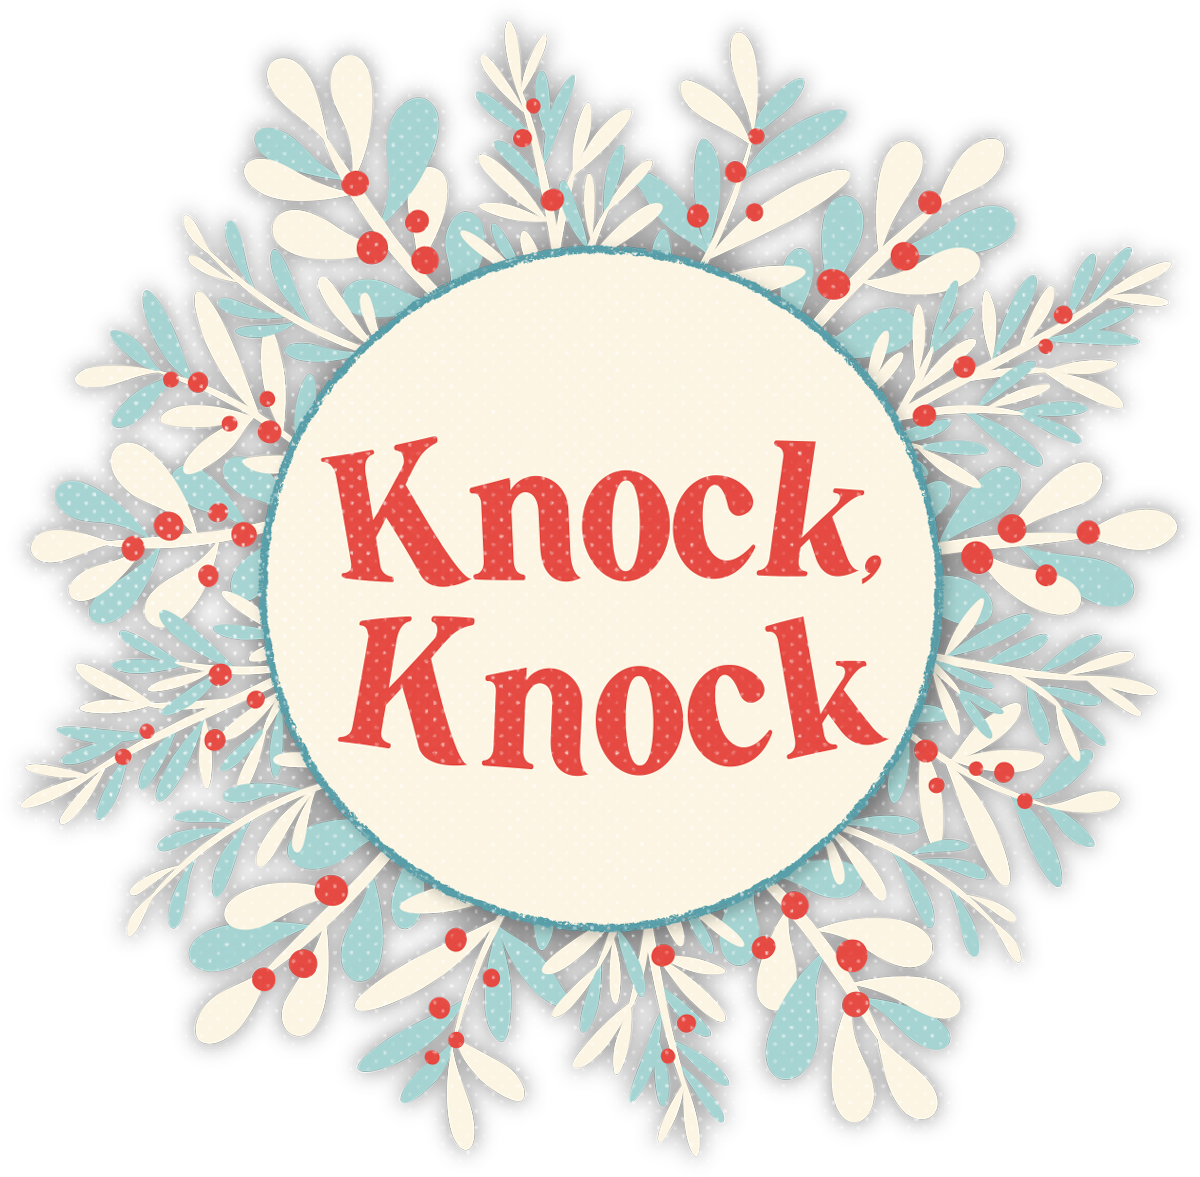 Knock,